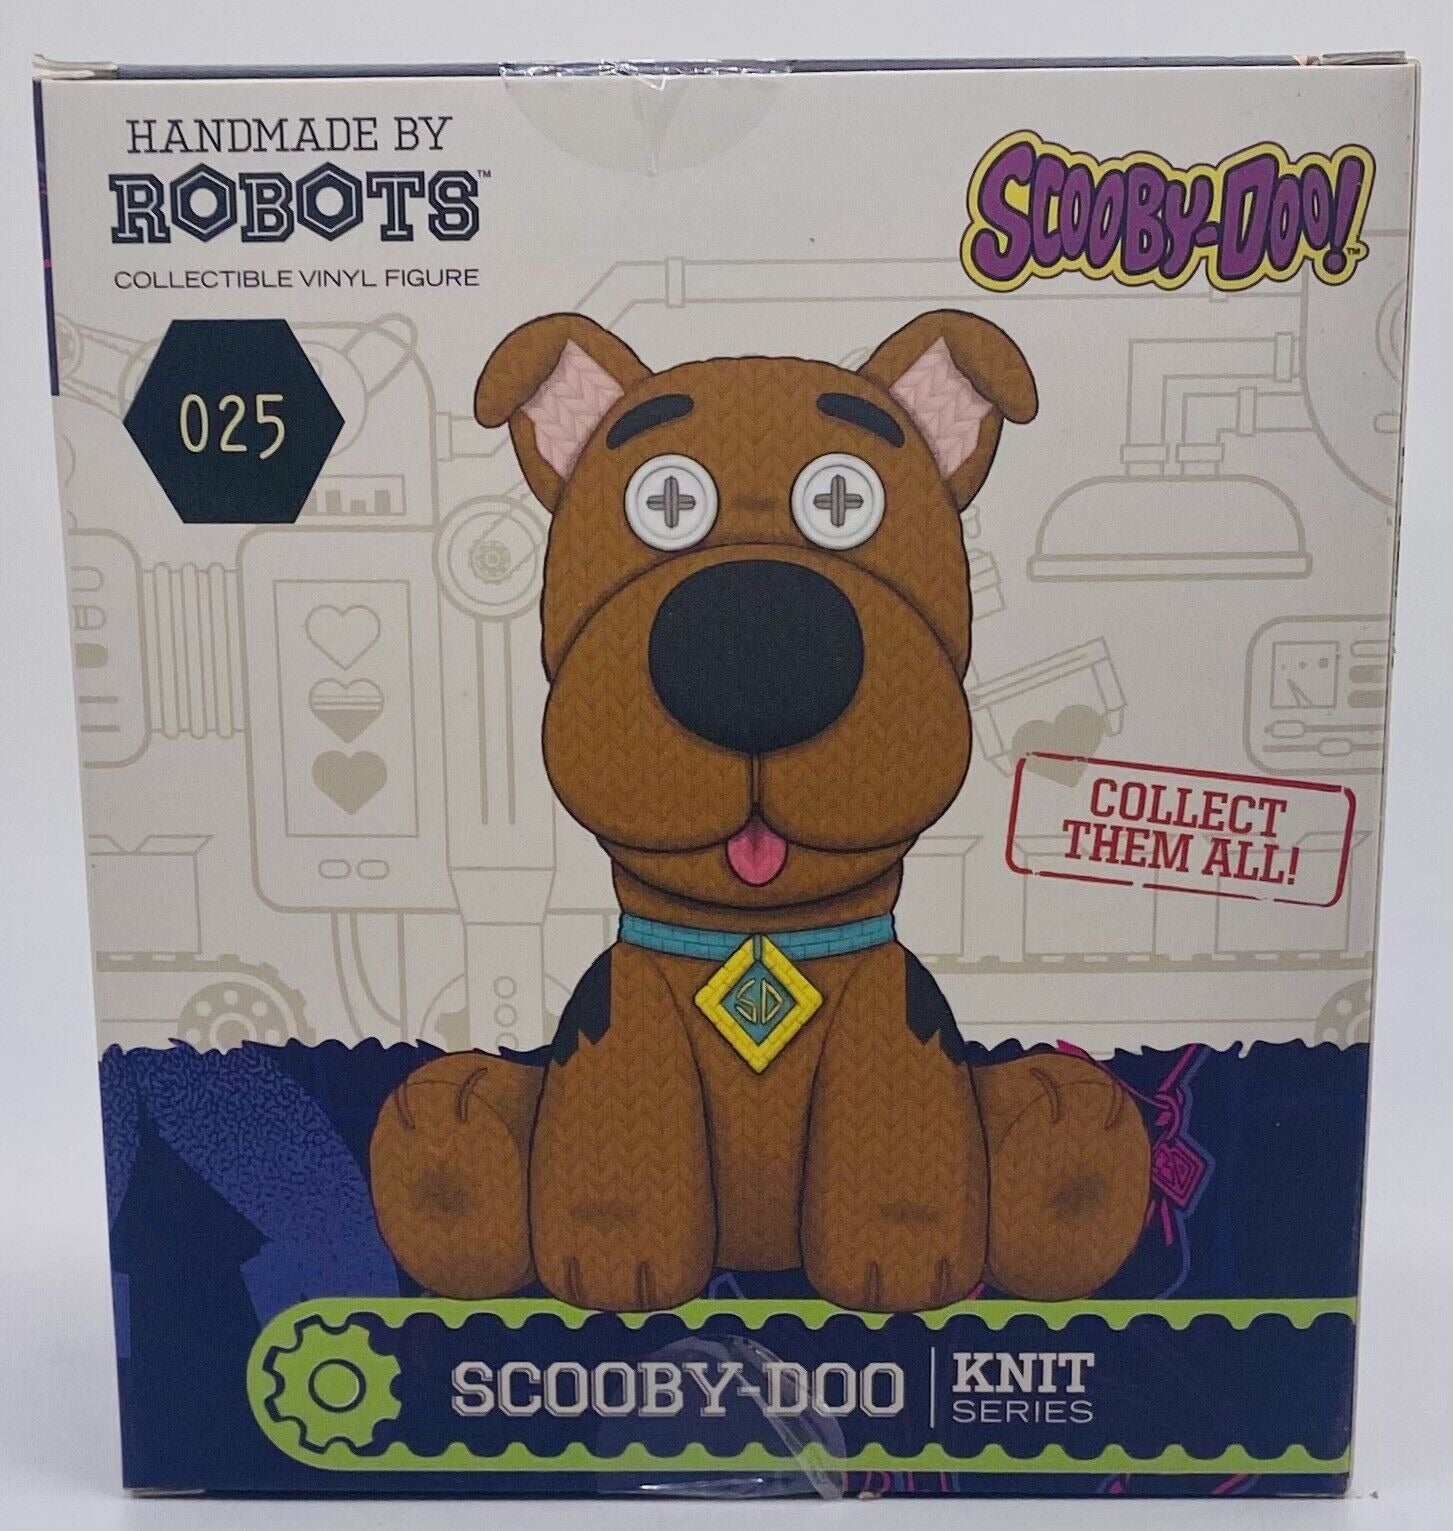 Hmbr Scooby Doo